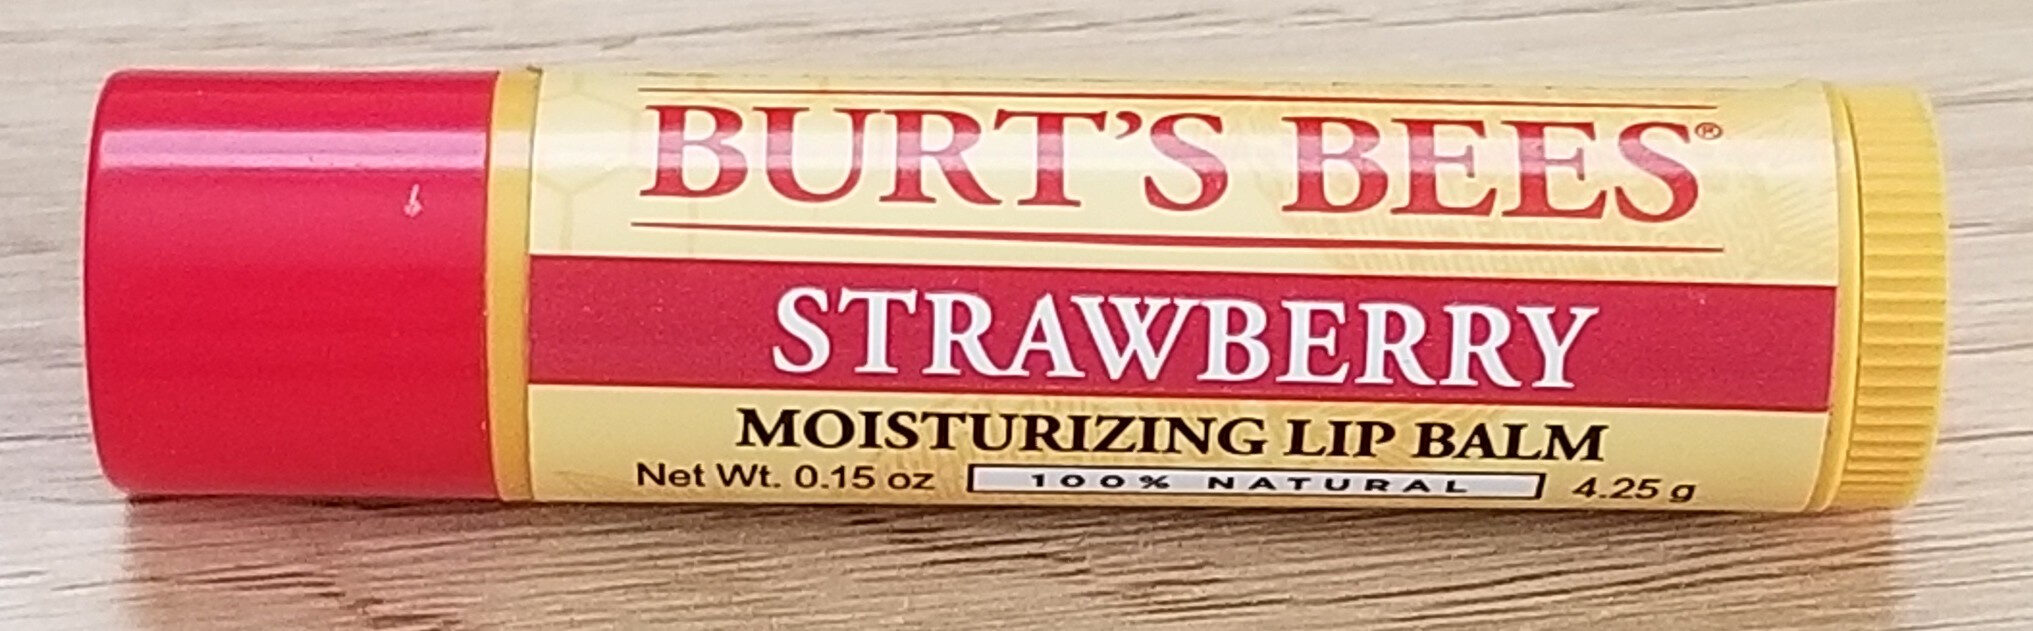 Strawberry Moisturizing Lip Balm - Tuote - en